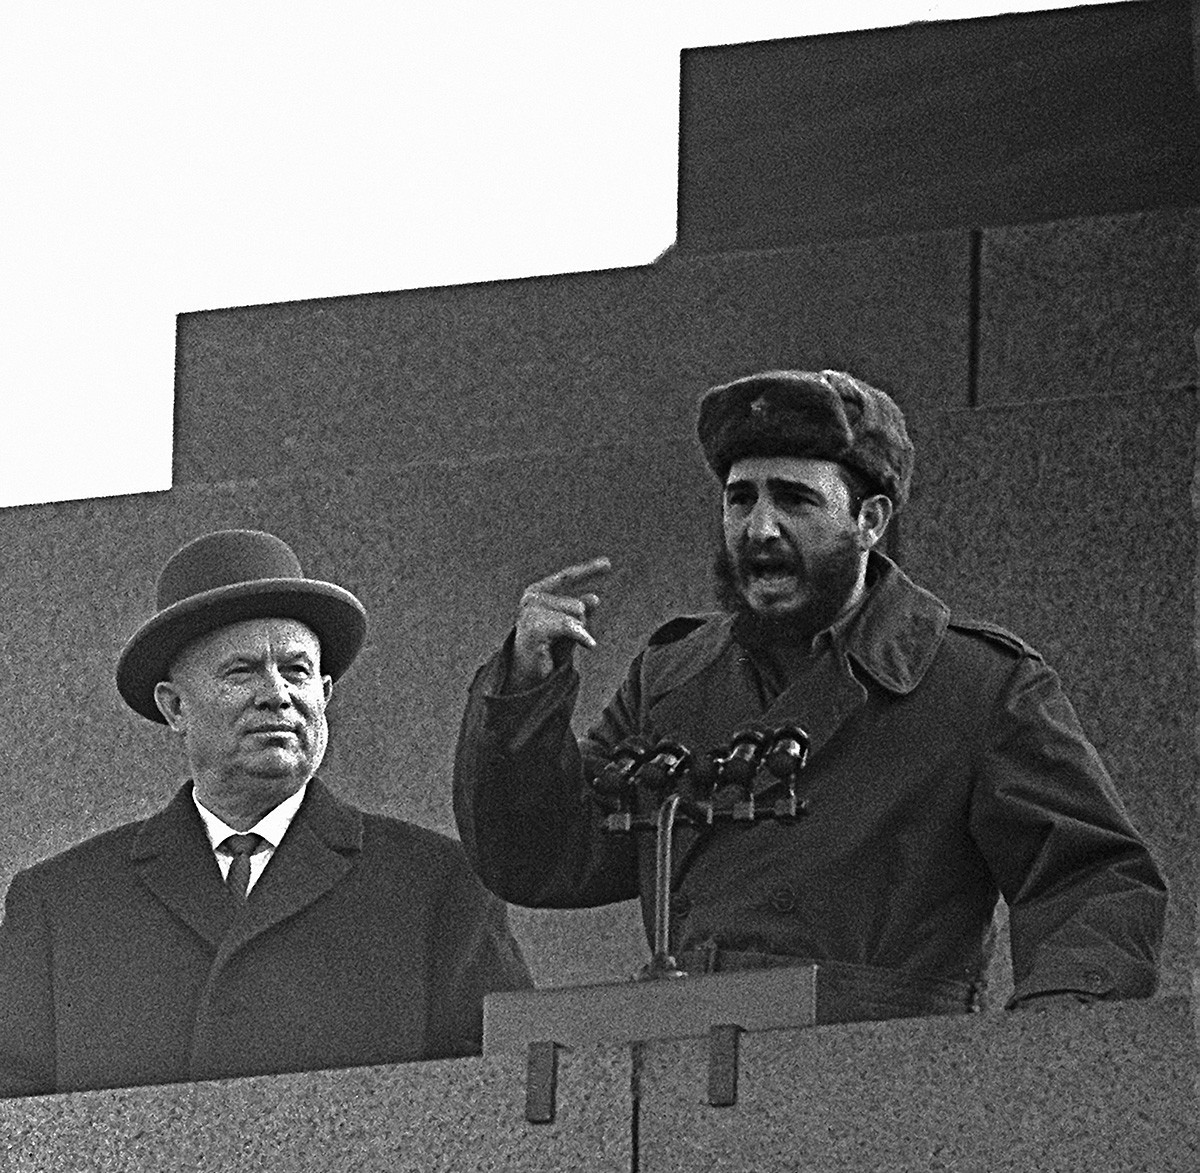 Nikita Khruschov e Fidel Castro

